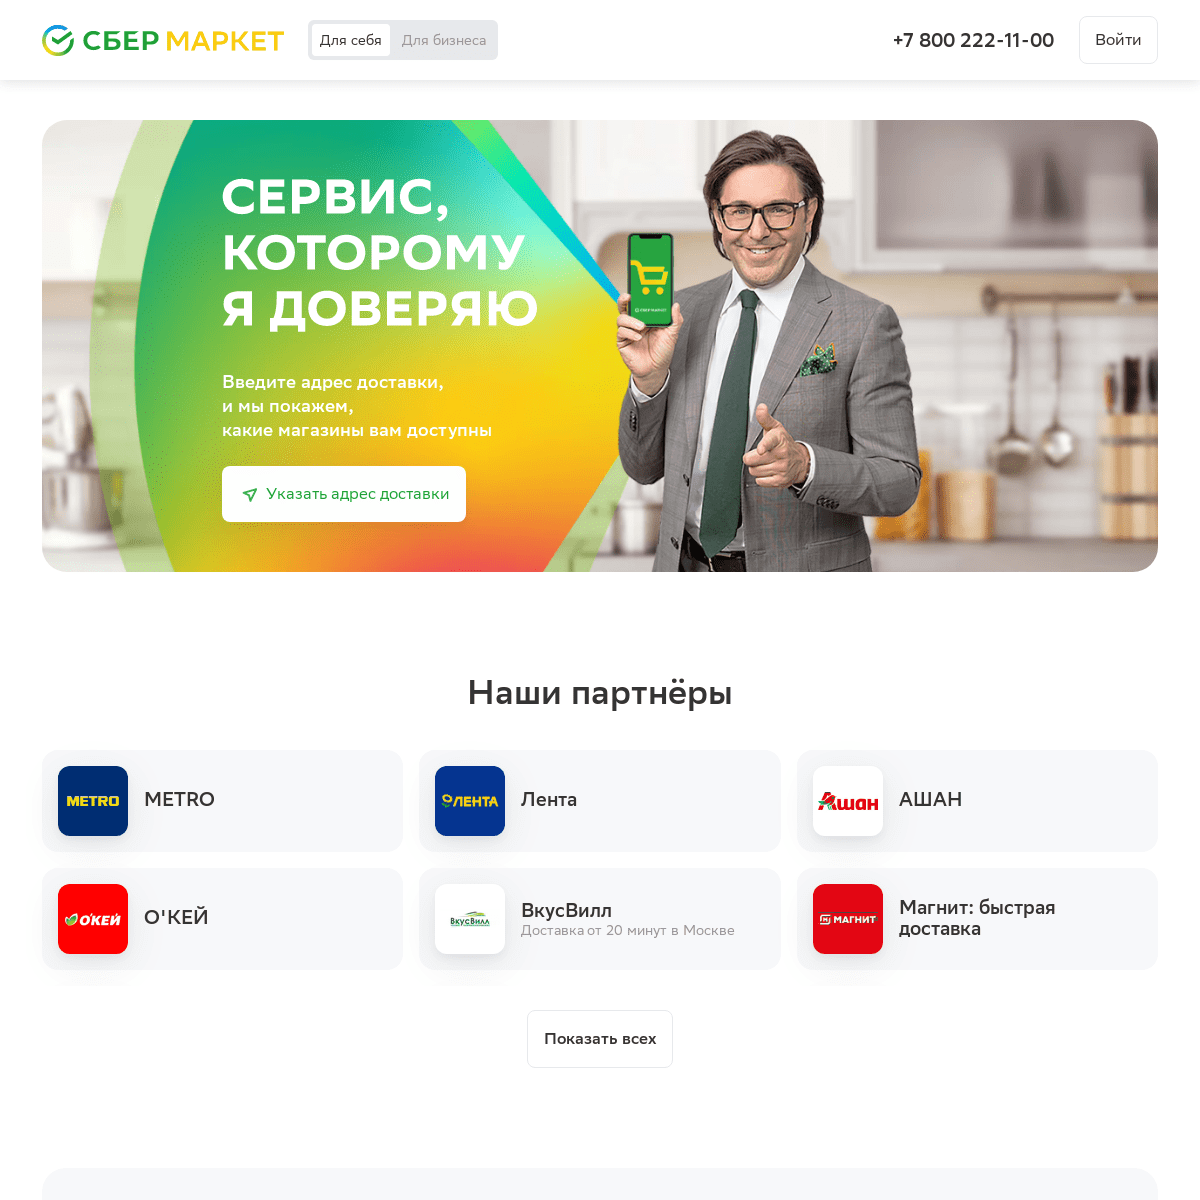 A complete backup of https://sbermarket.ru